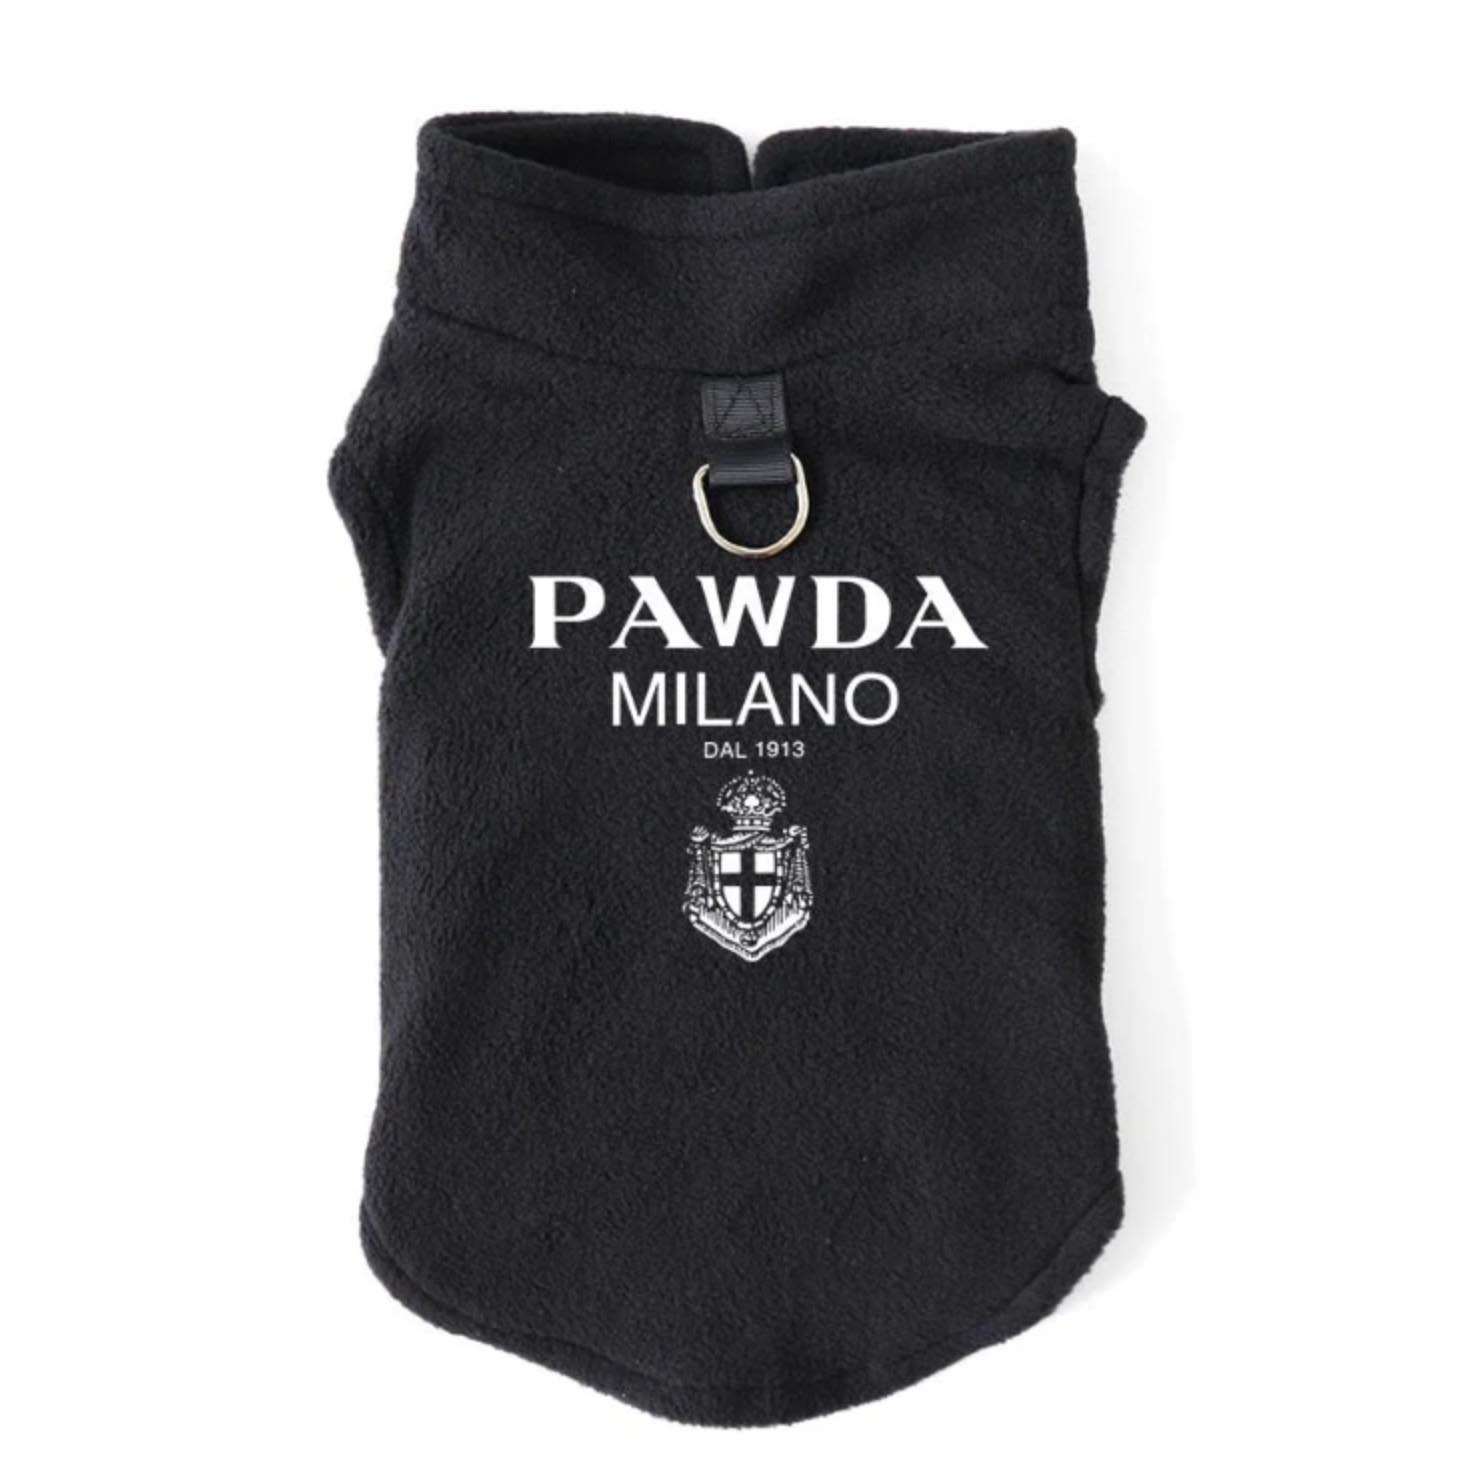 Pawda Milano Dog Vest Jacket